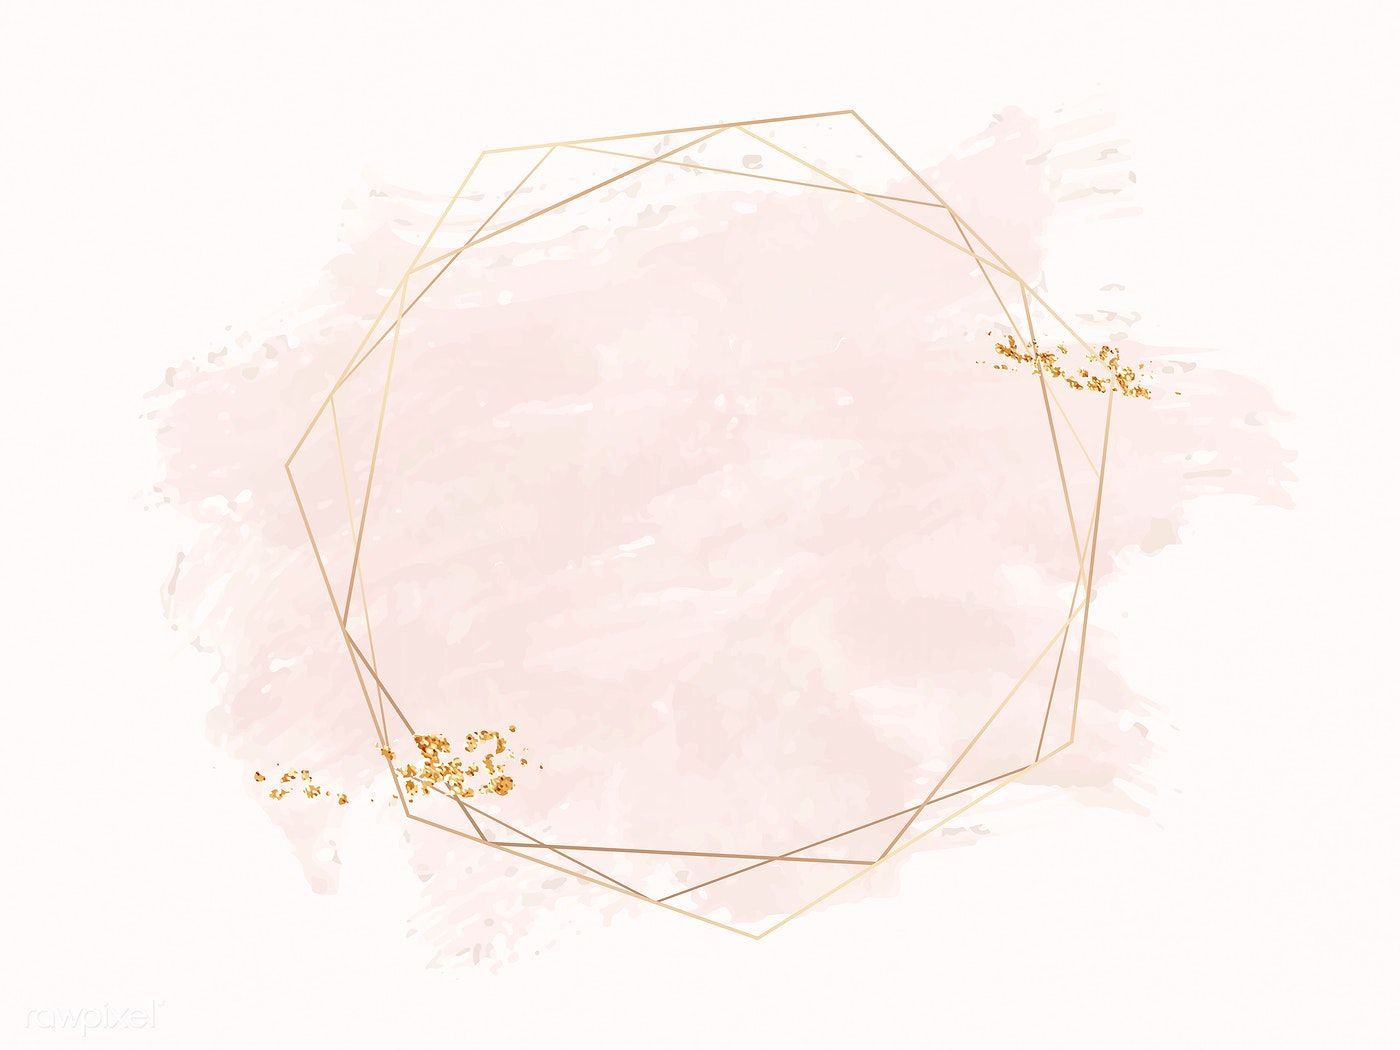 Download premium illustration of Gold geometric frame on a pink